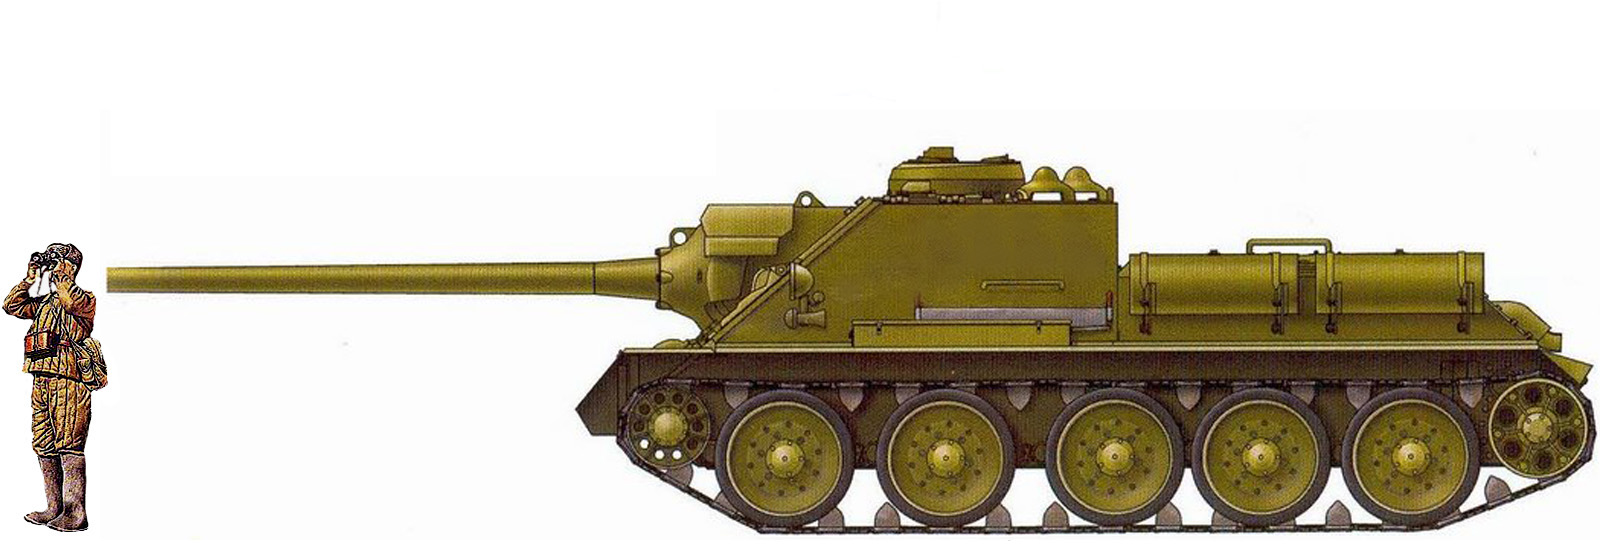 Бок ис. Самоходная артустановка Су- 100.. Су-100y броня. Су-85 танк СССР. Самоходка Су-100.